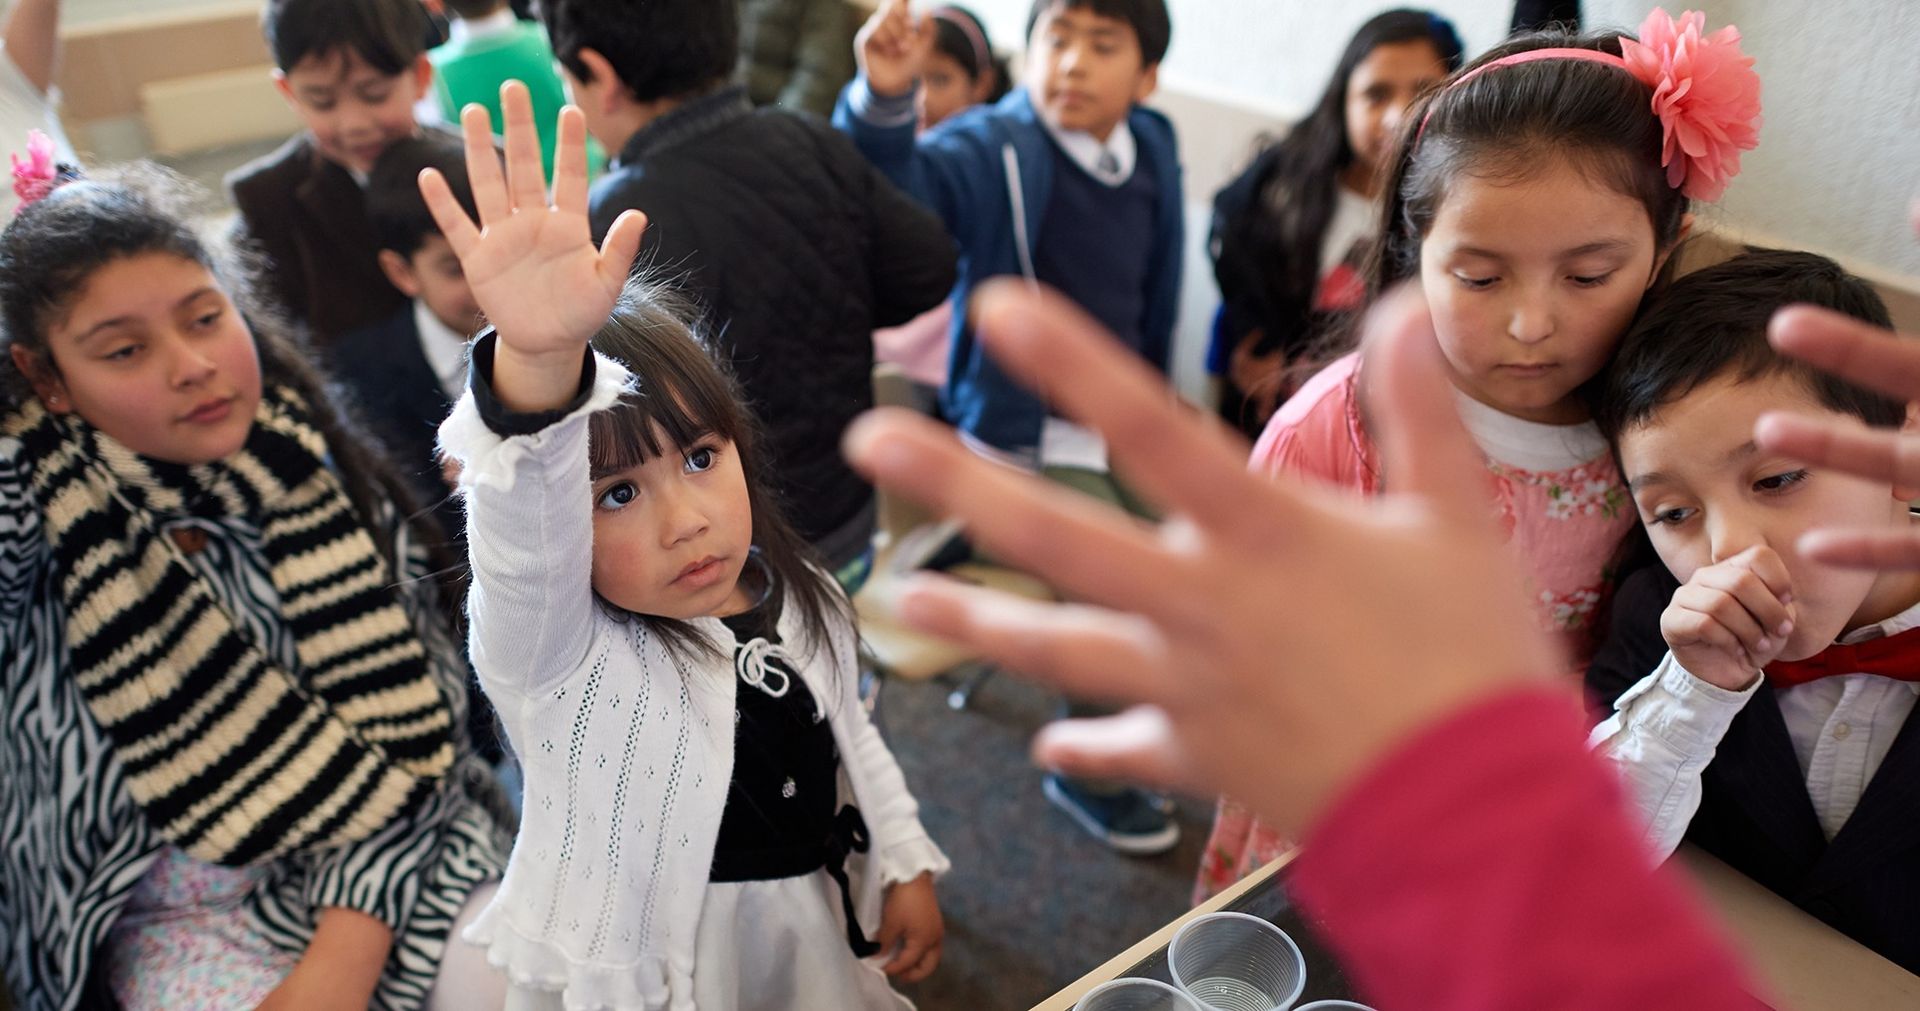 A little girl raising her hand among other small children.